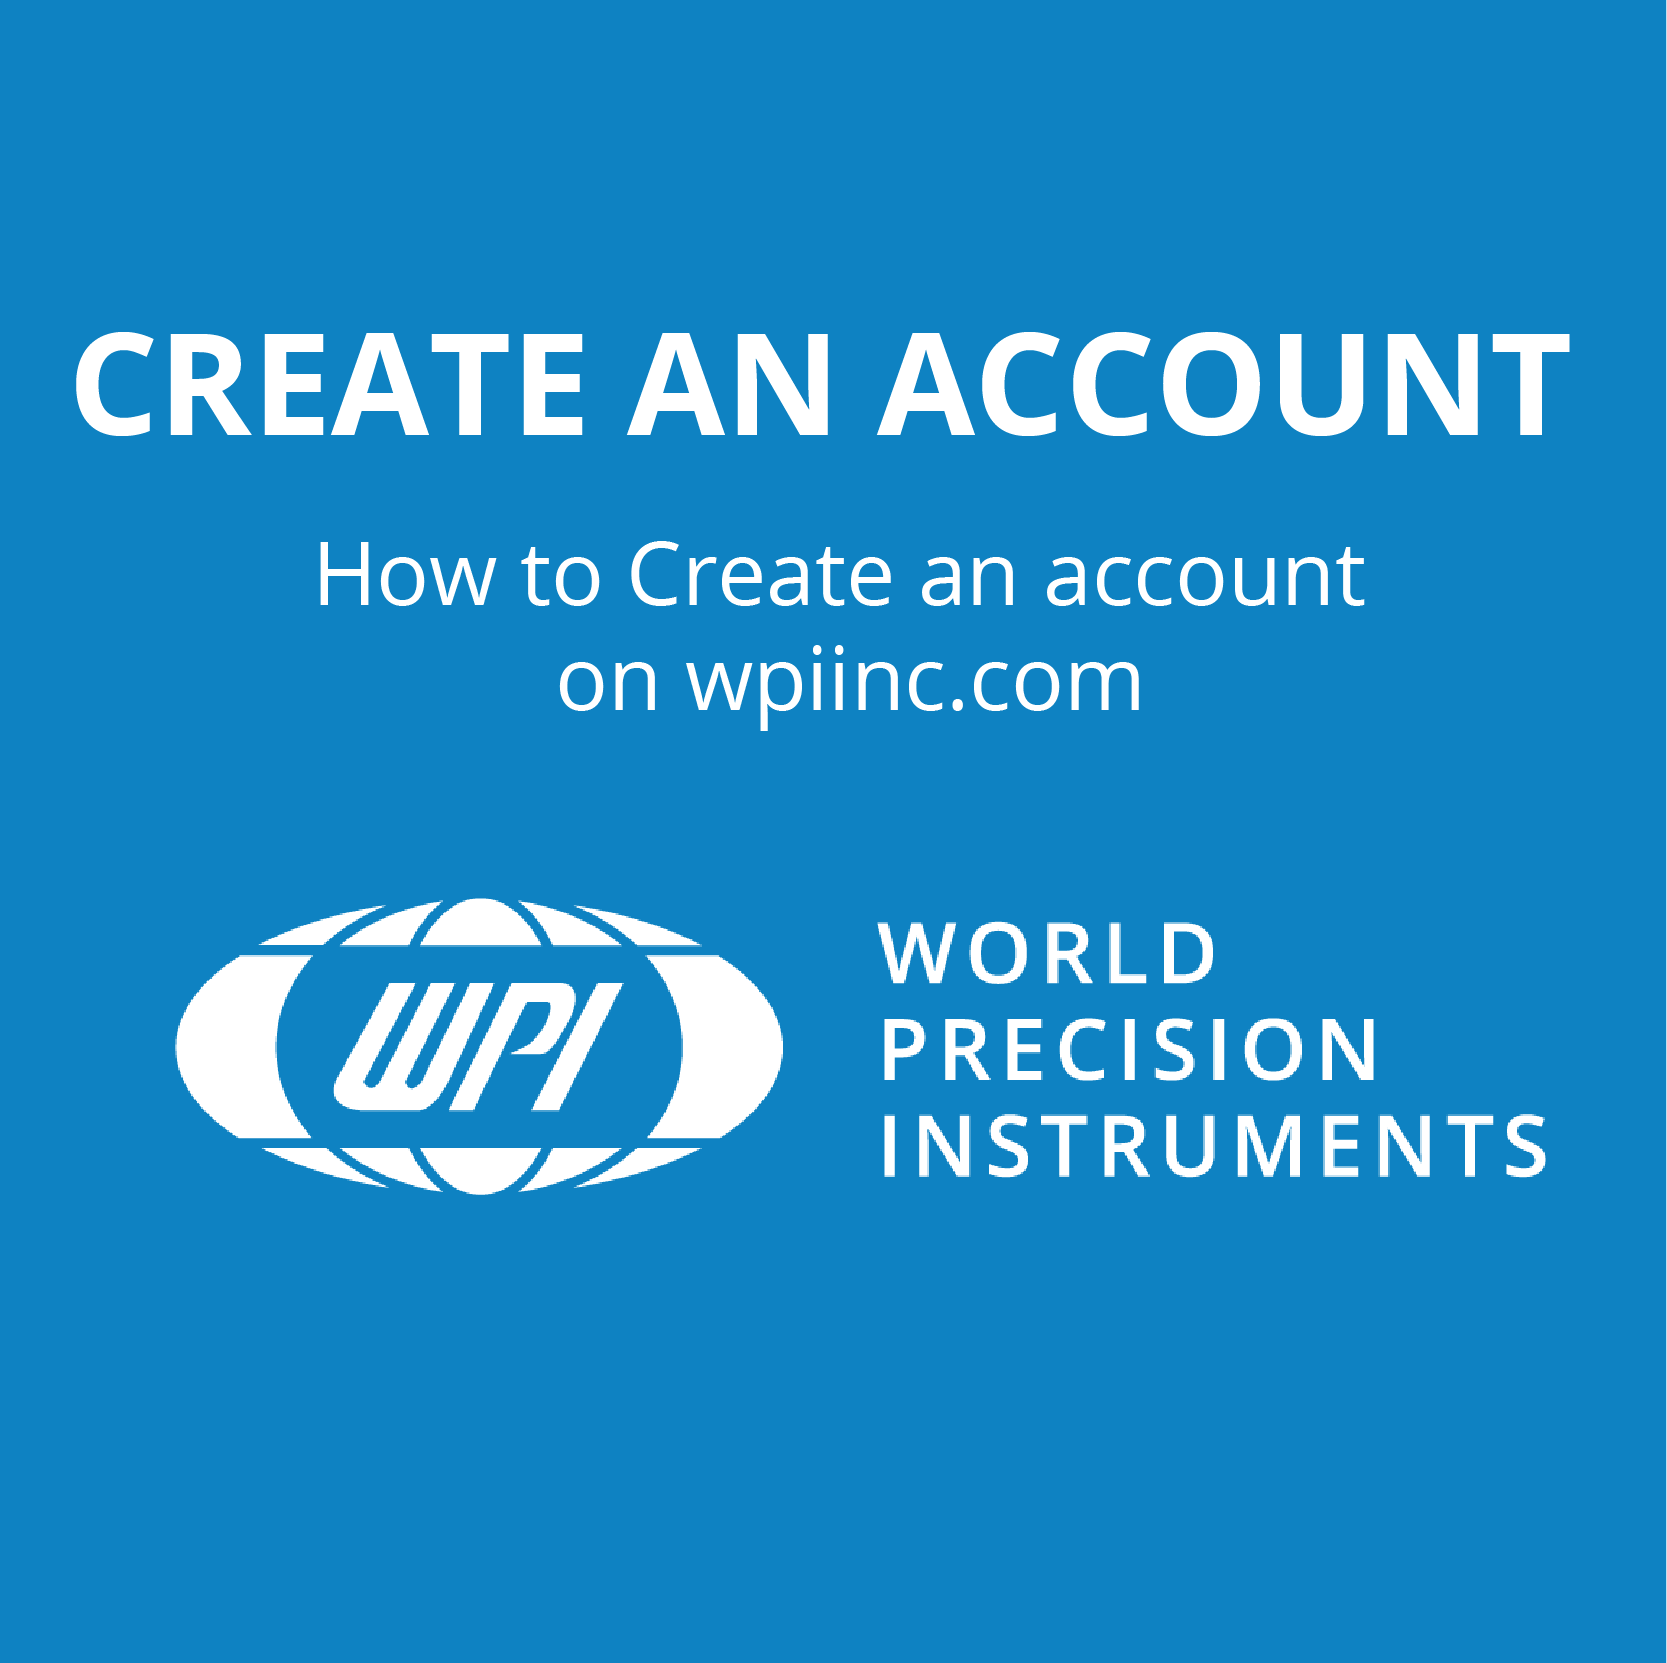 VIDEO: Create an Account at WPI Website